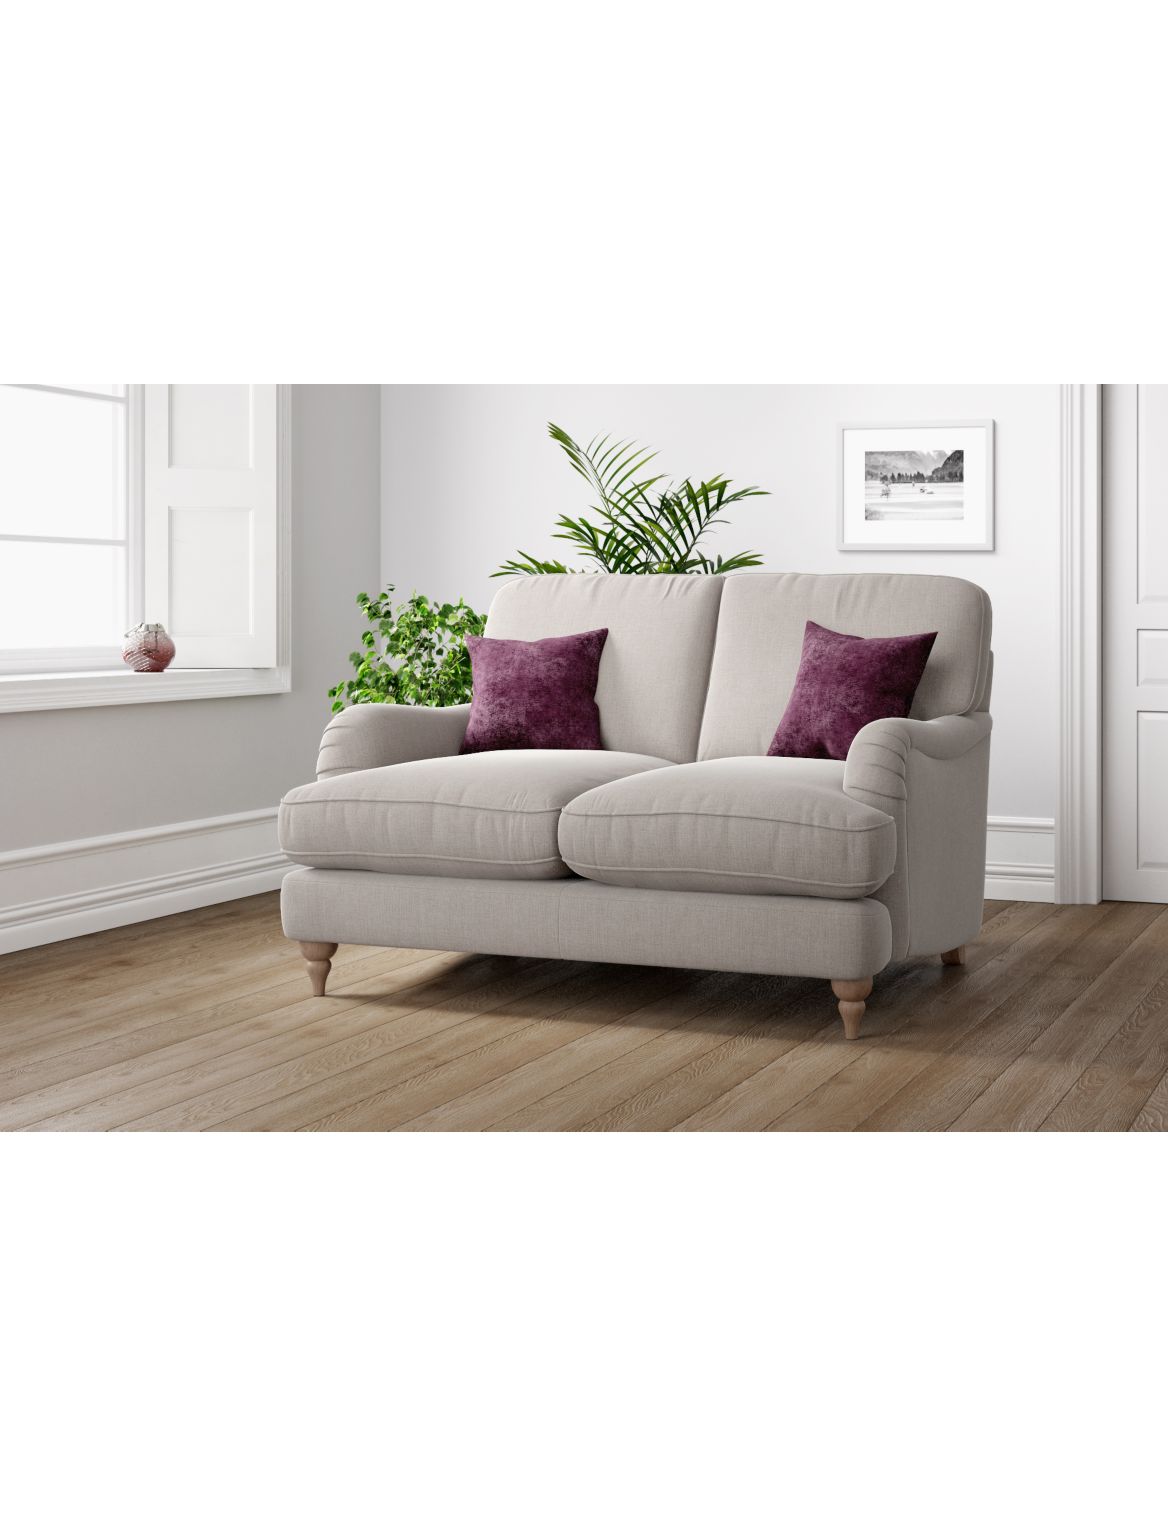 Rochester Compact Sofa